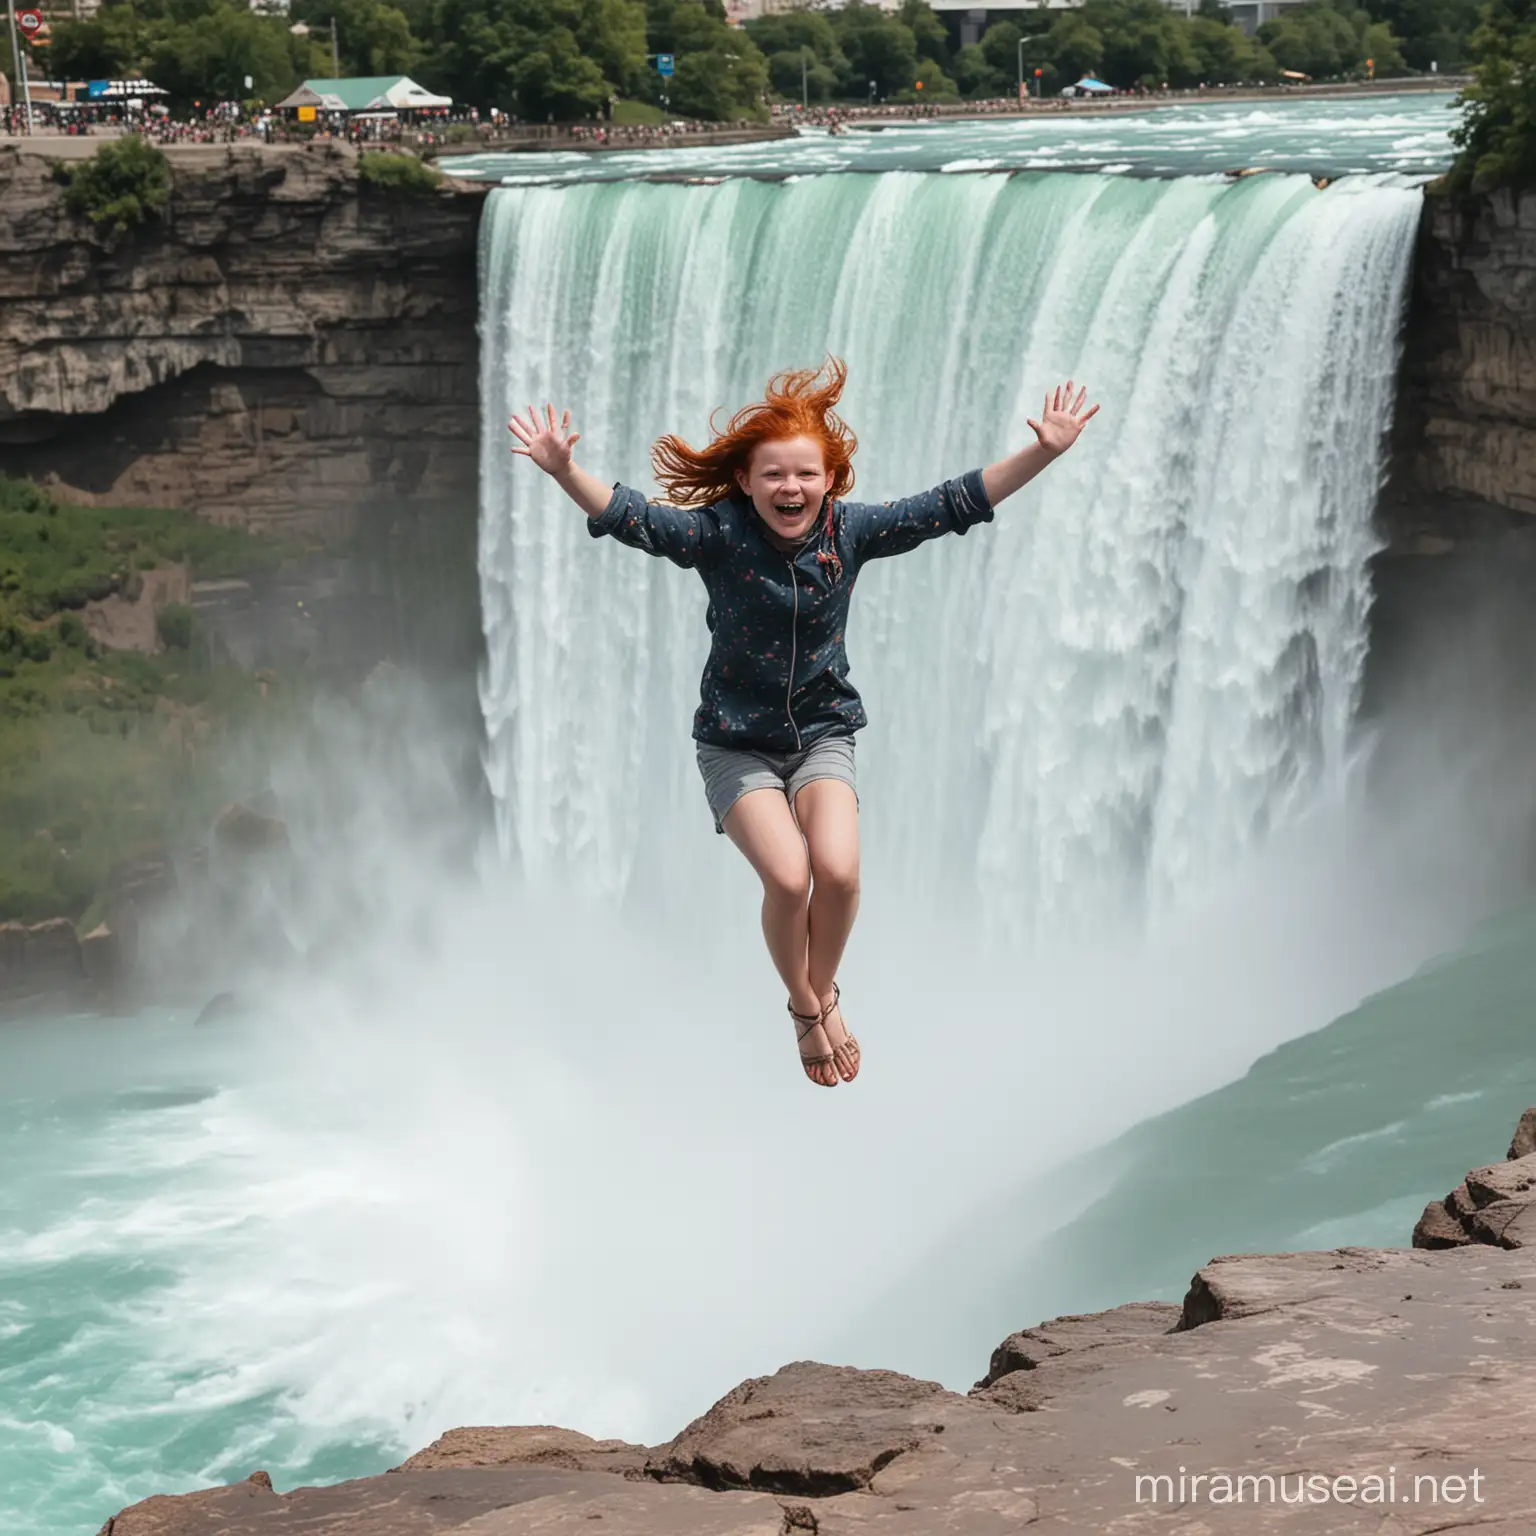 Redheaded Child Enjoying a Playful Leap at Niagara Falls